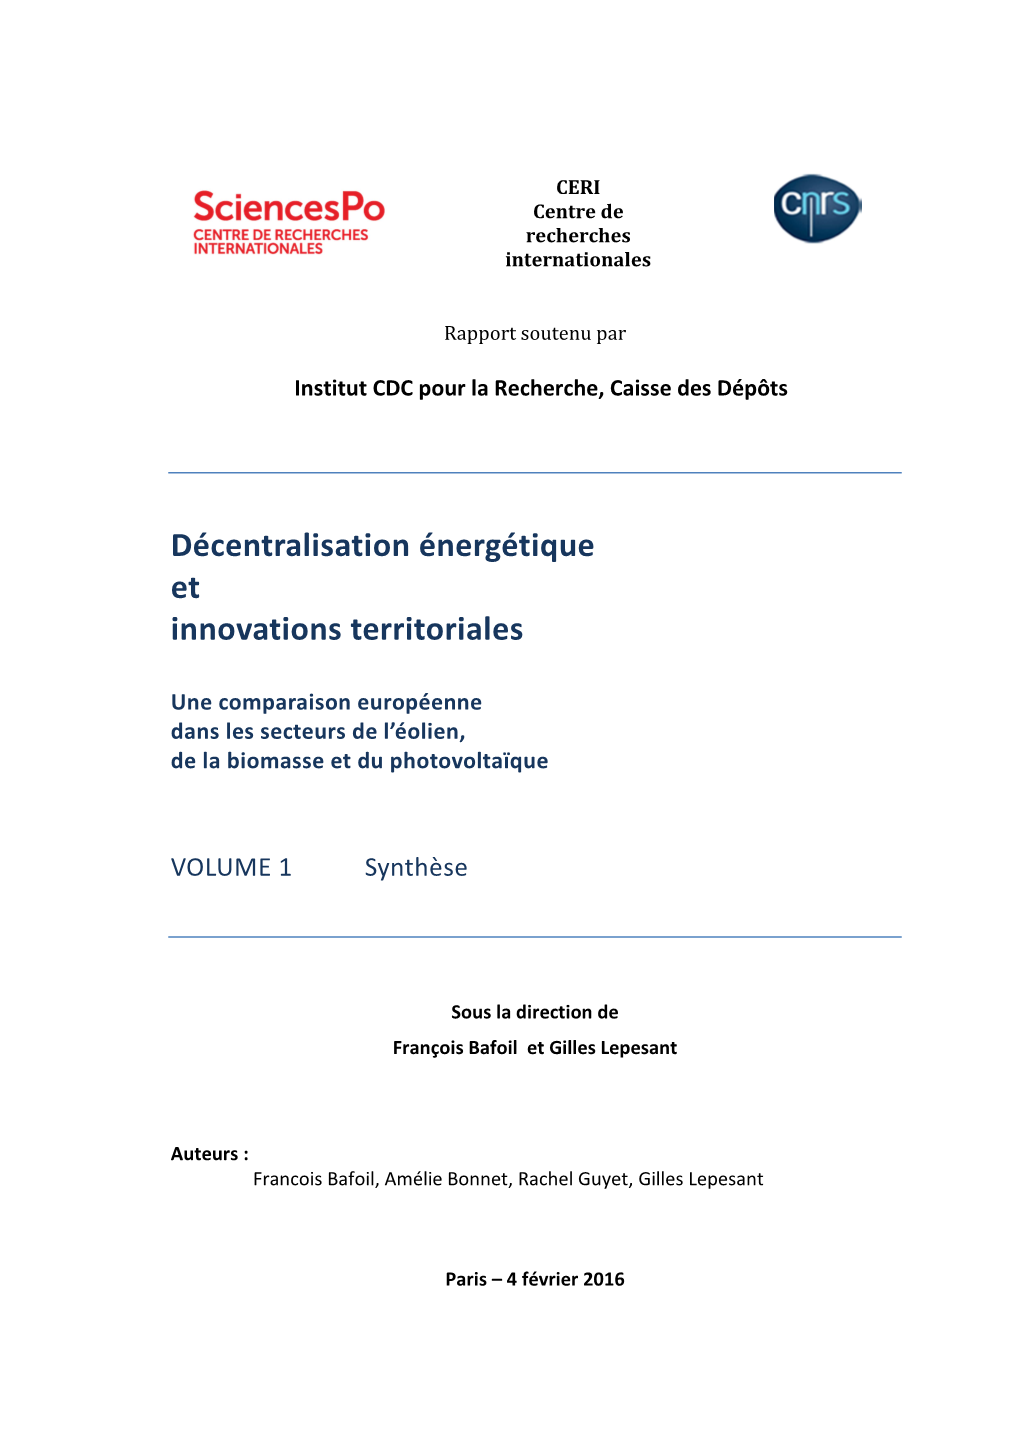 Recherche CERI 2016 -Volume 1 Synthèse